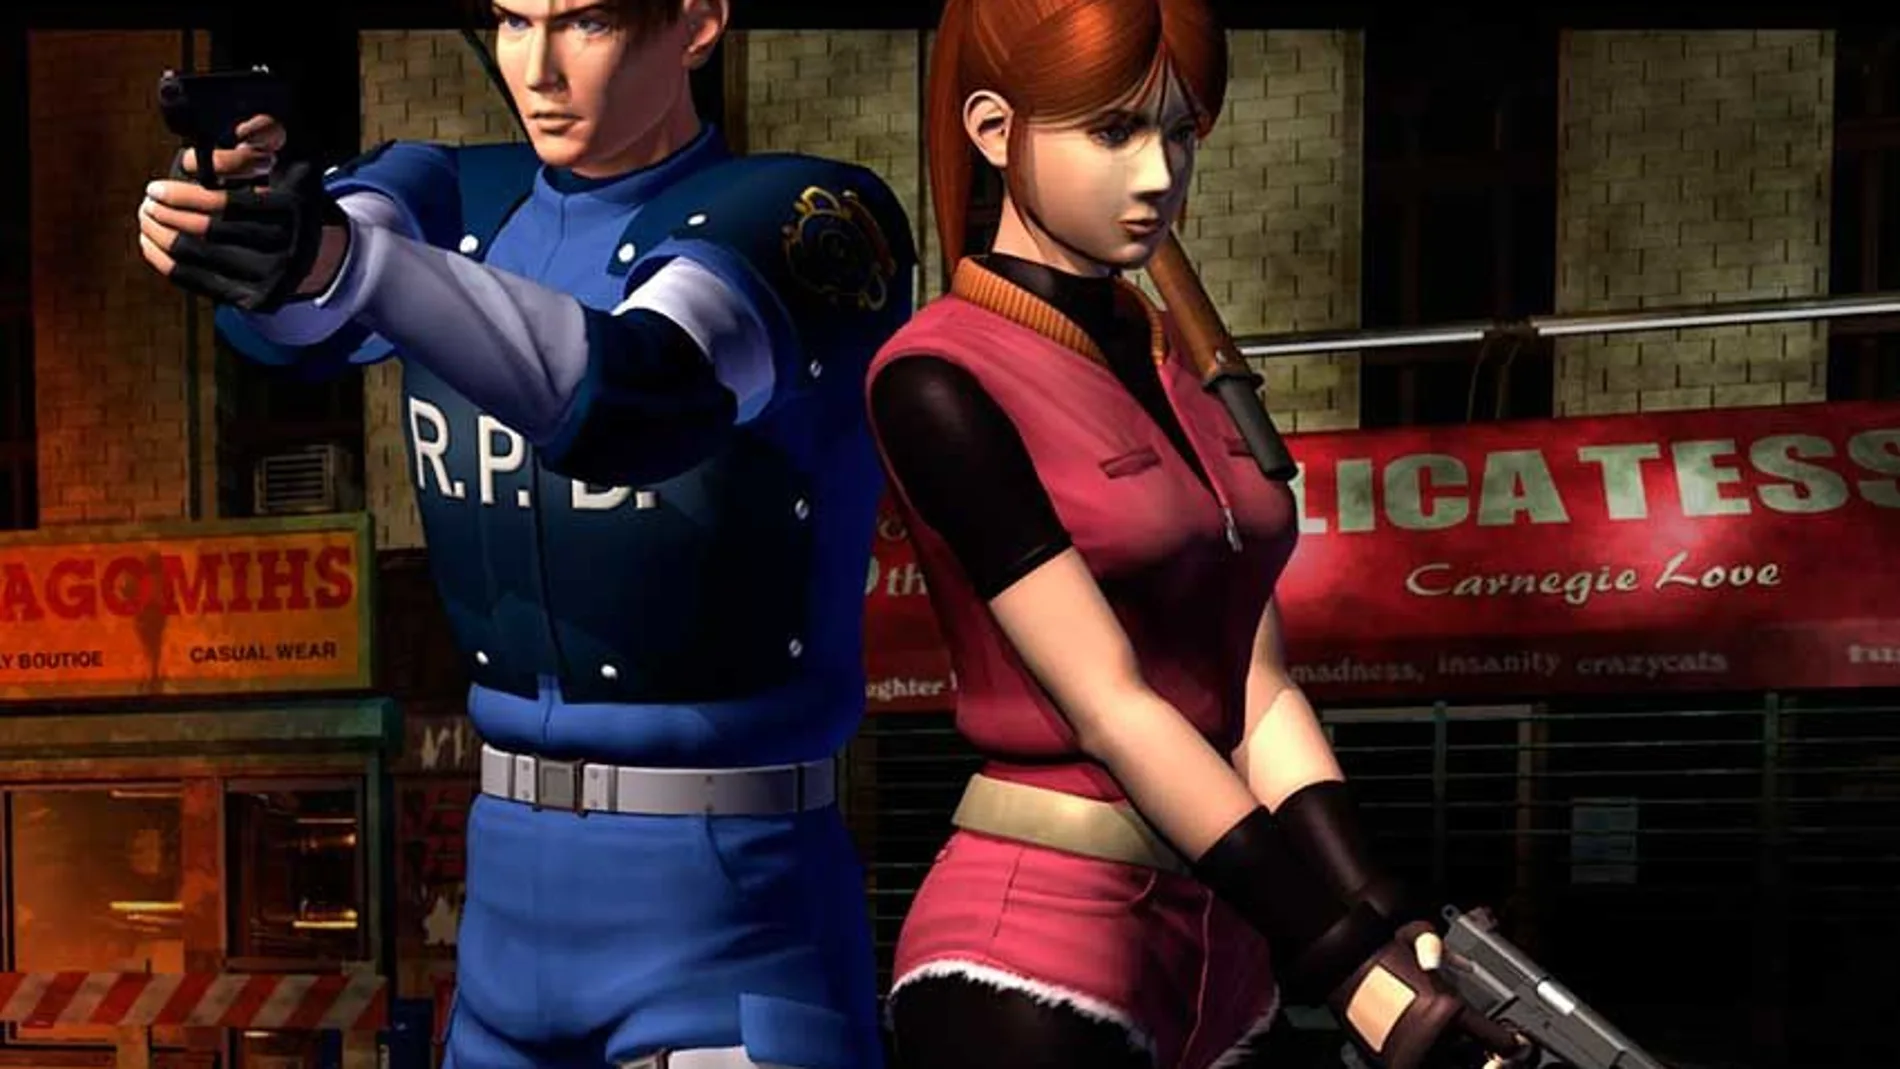 La franquicia Resident Evil celebra su 20 aniversario